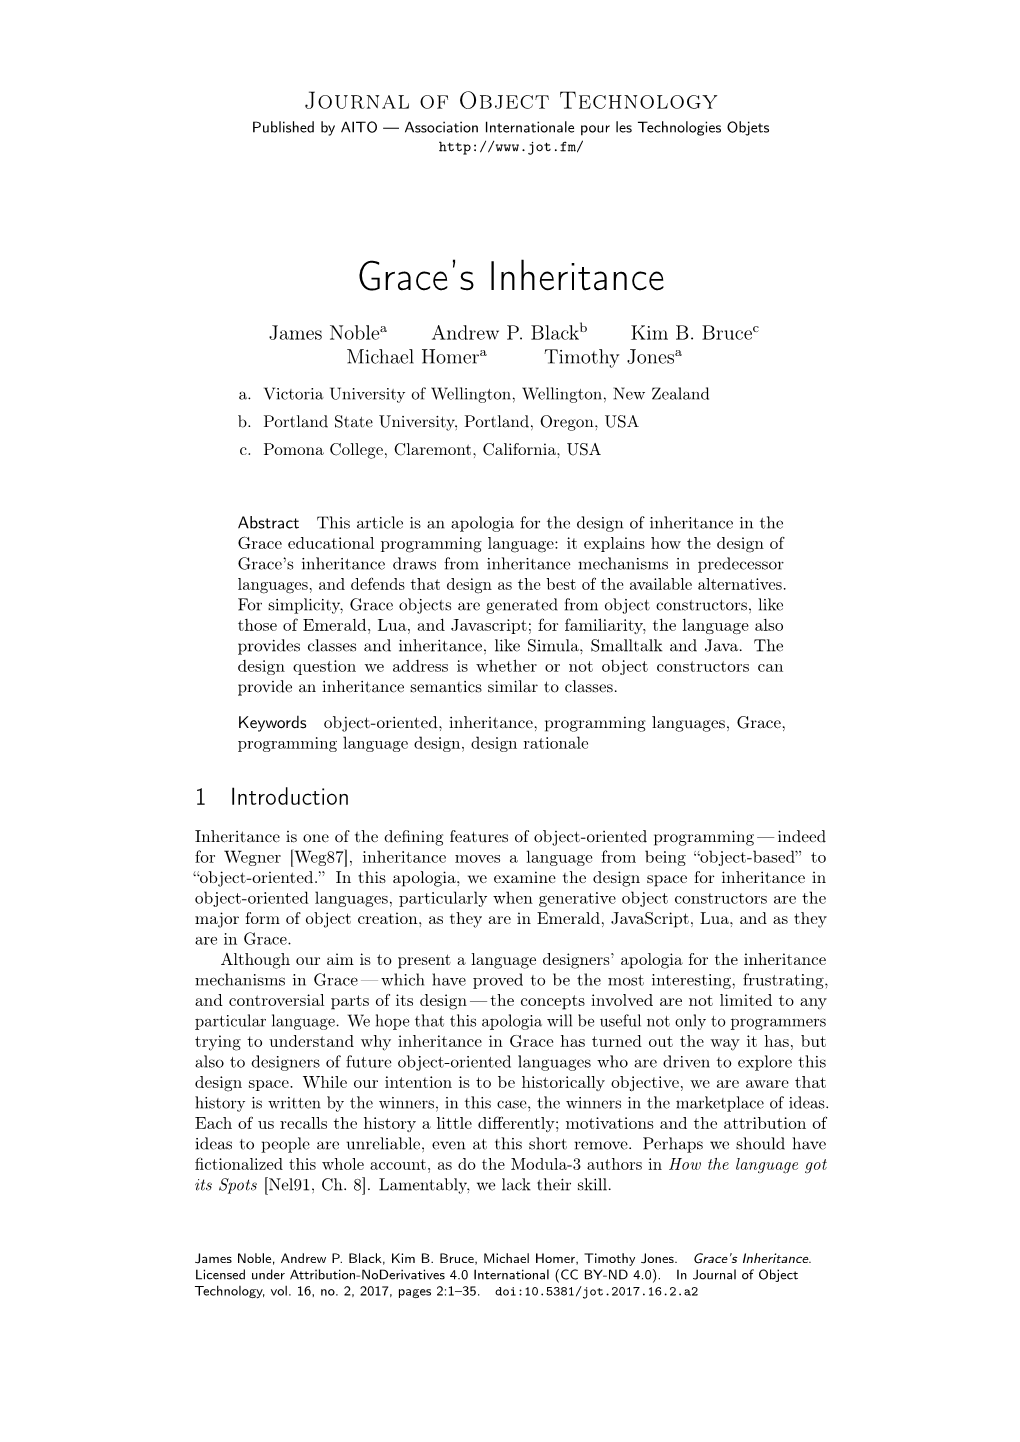 Grace's Inheritance